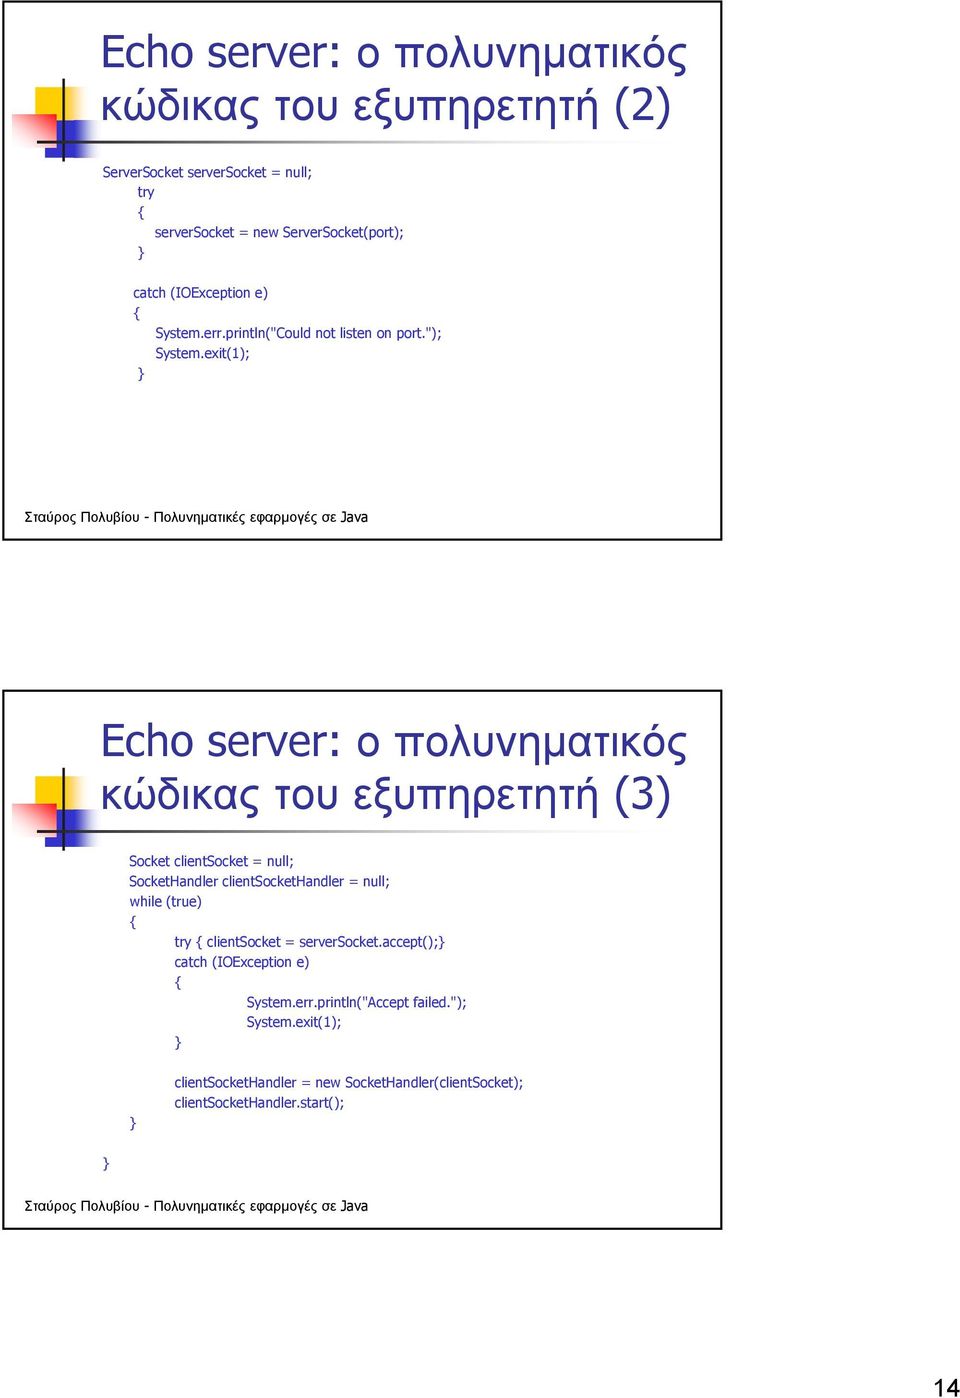 exit(1); Echo server: ο πολυνηµατικός κώδικας του εξυπηρετητή (3) Socket clientsocket = null; SocketHandler clientsockethandler = null; while